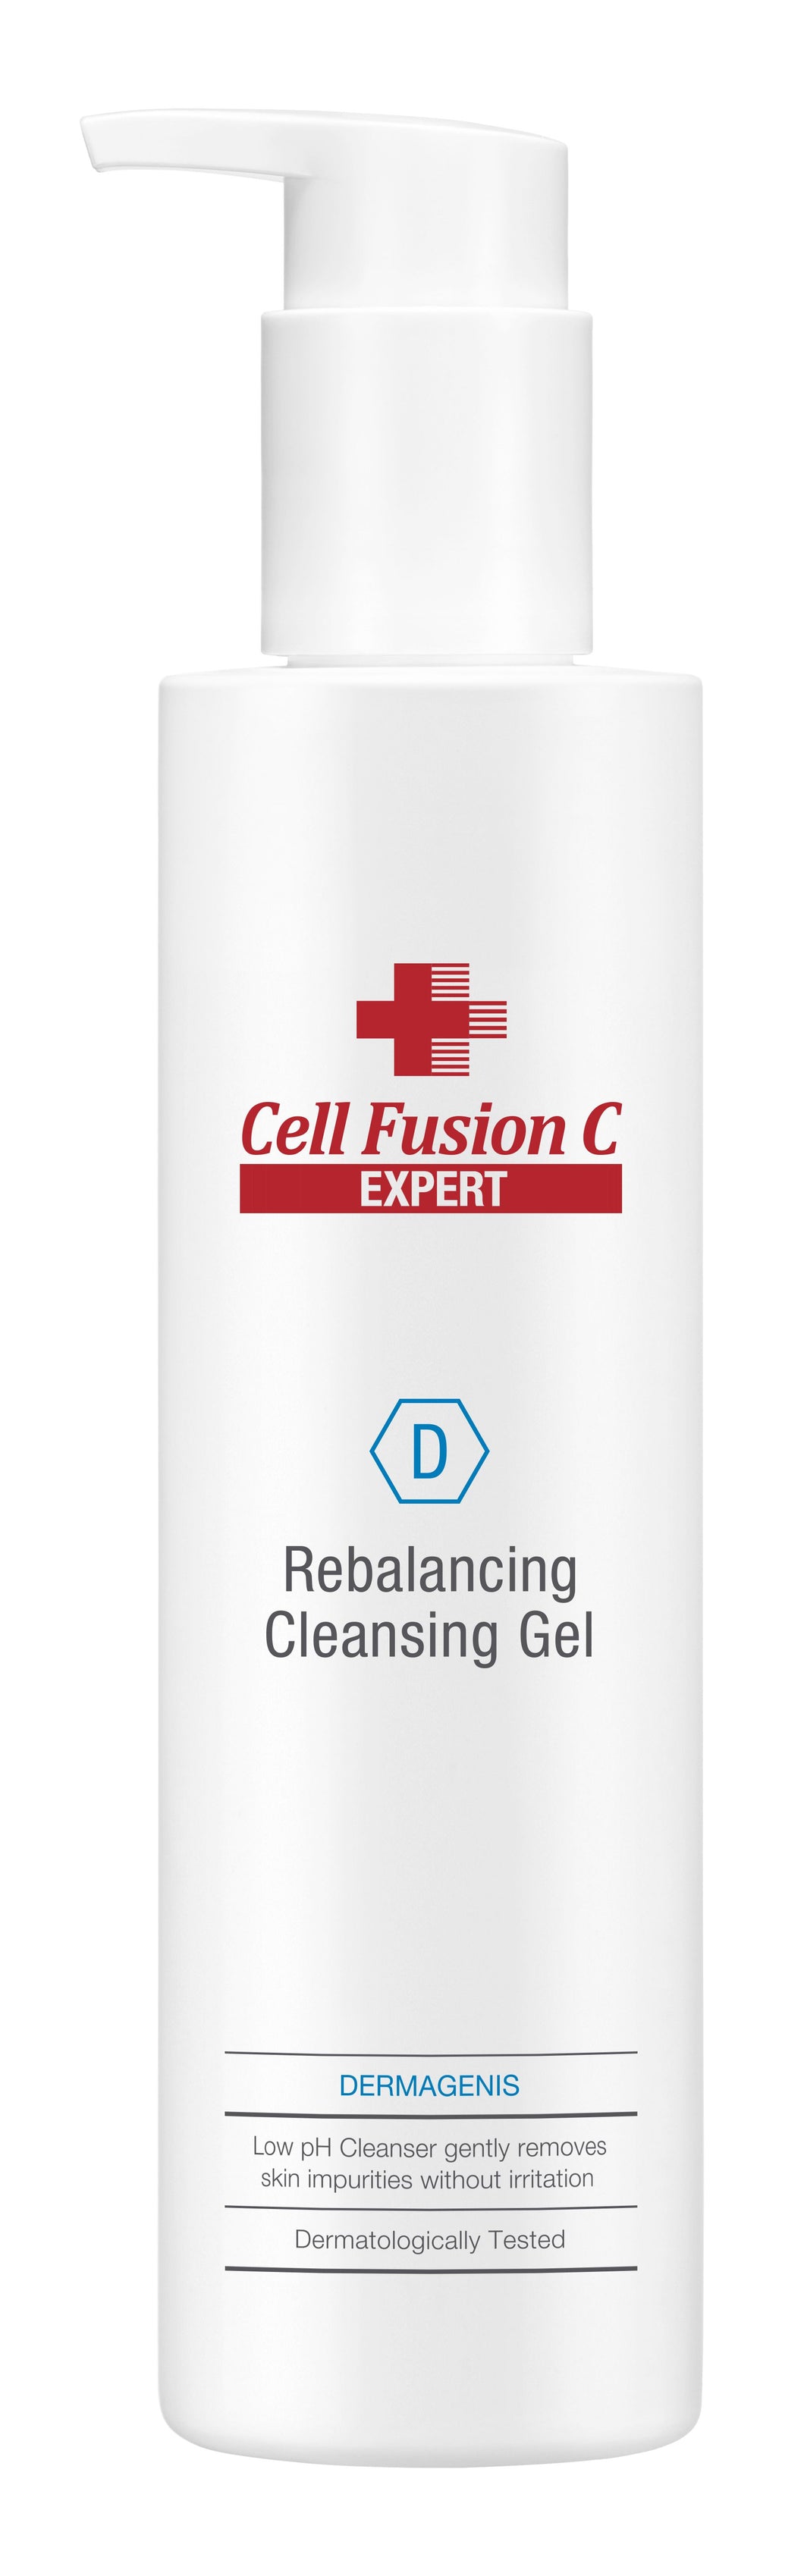 [Cell Fusion C Expert] Dermagenis Rebalancing Cleansing Gel 200ml